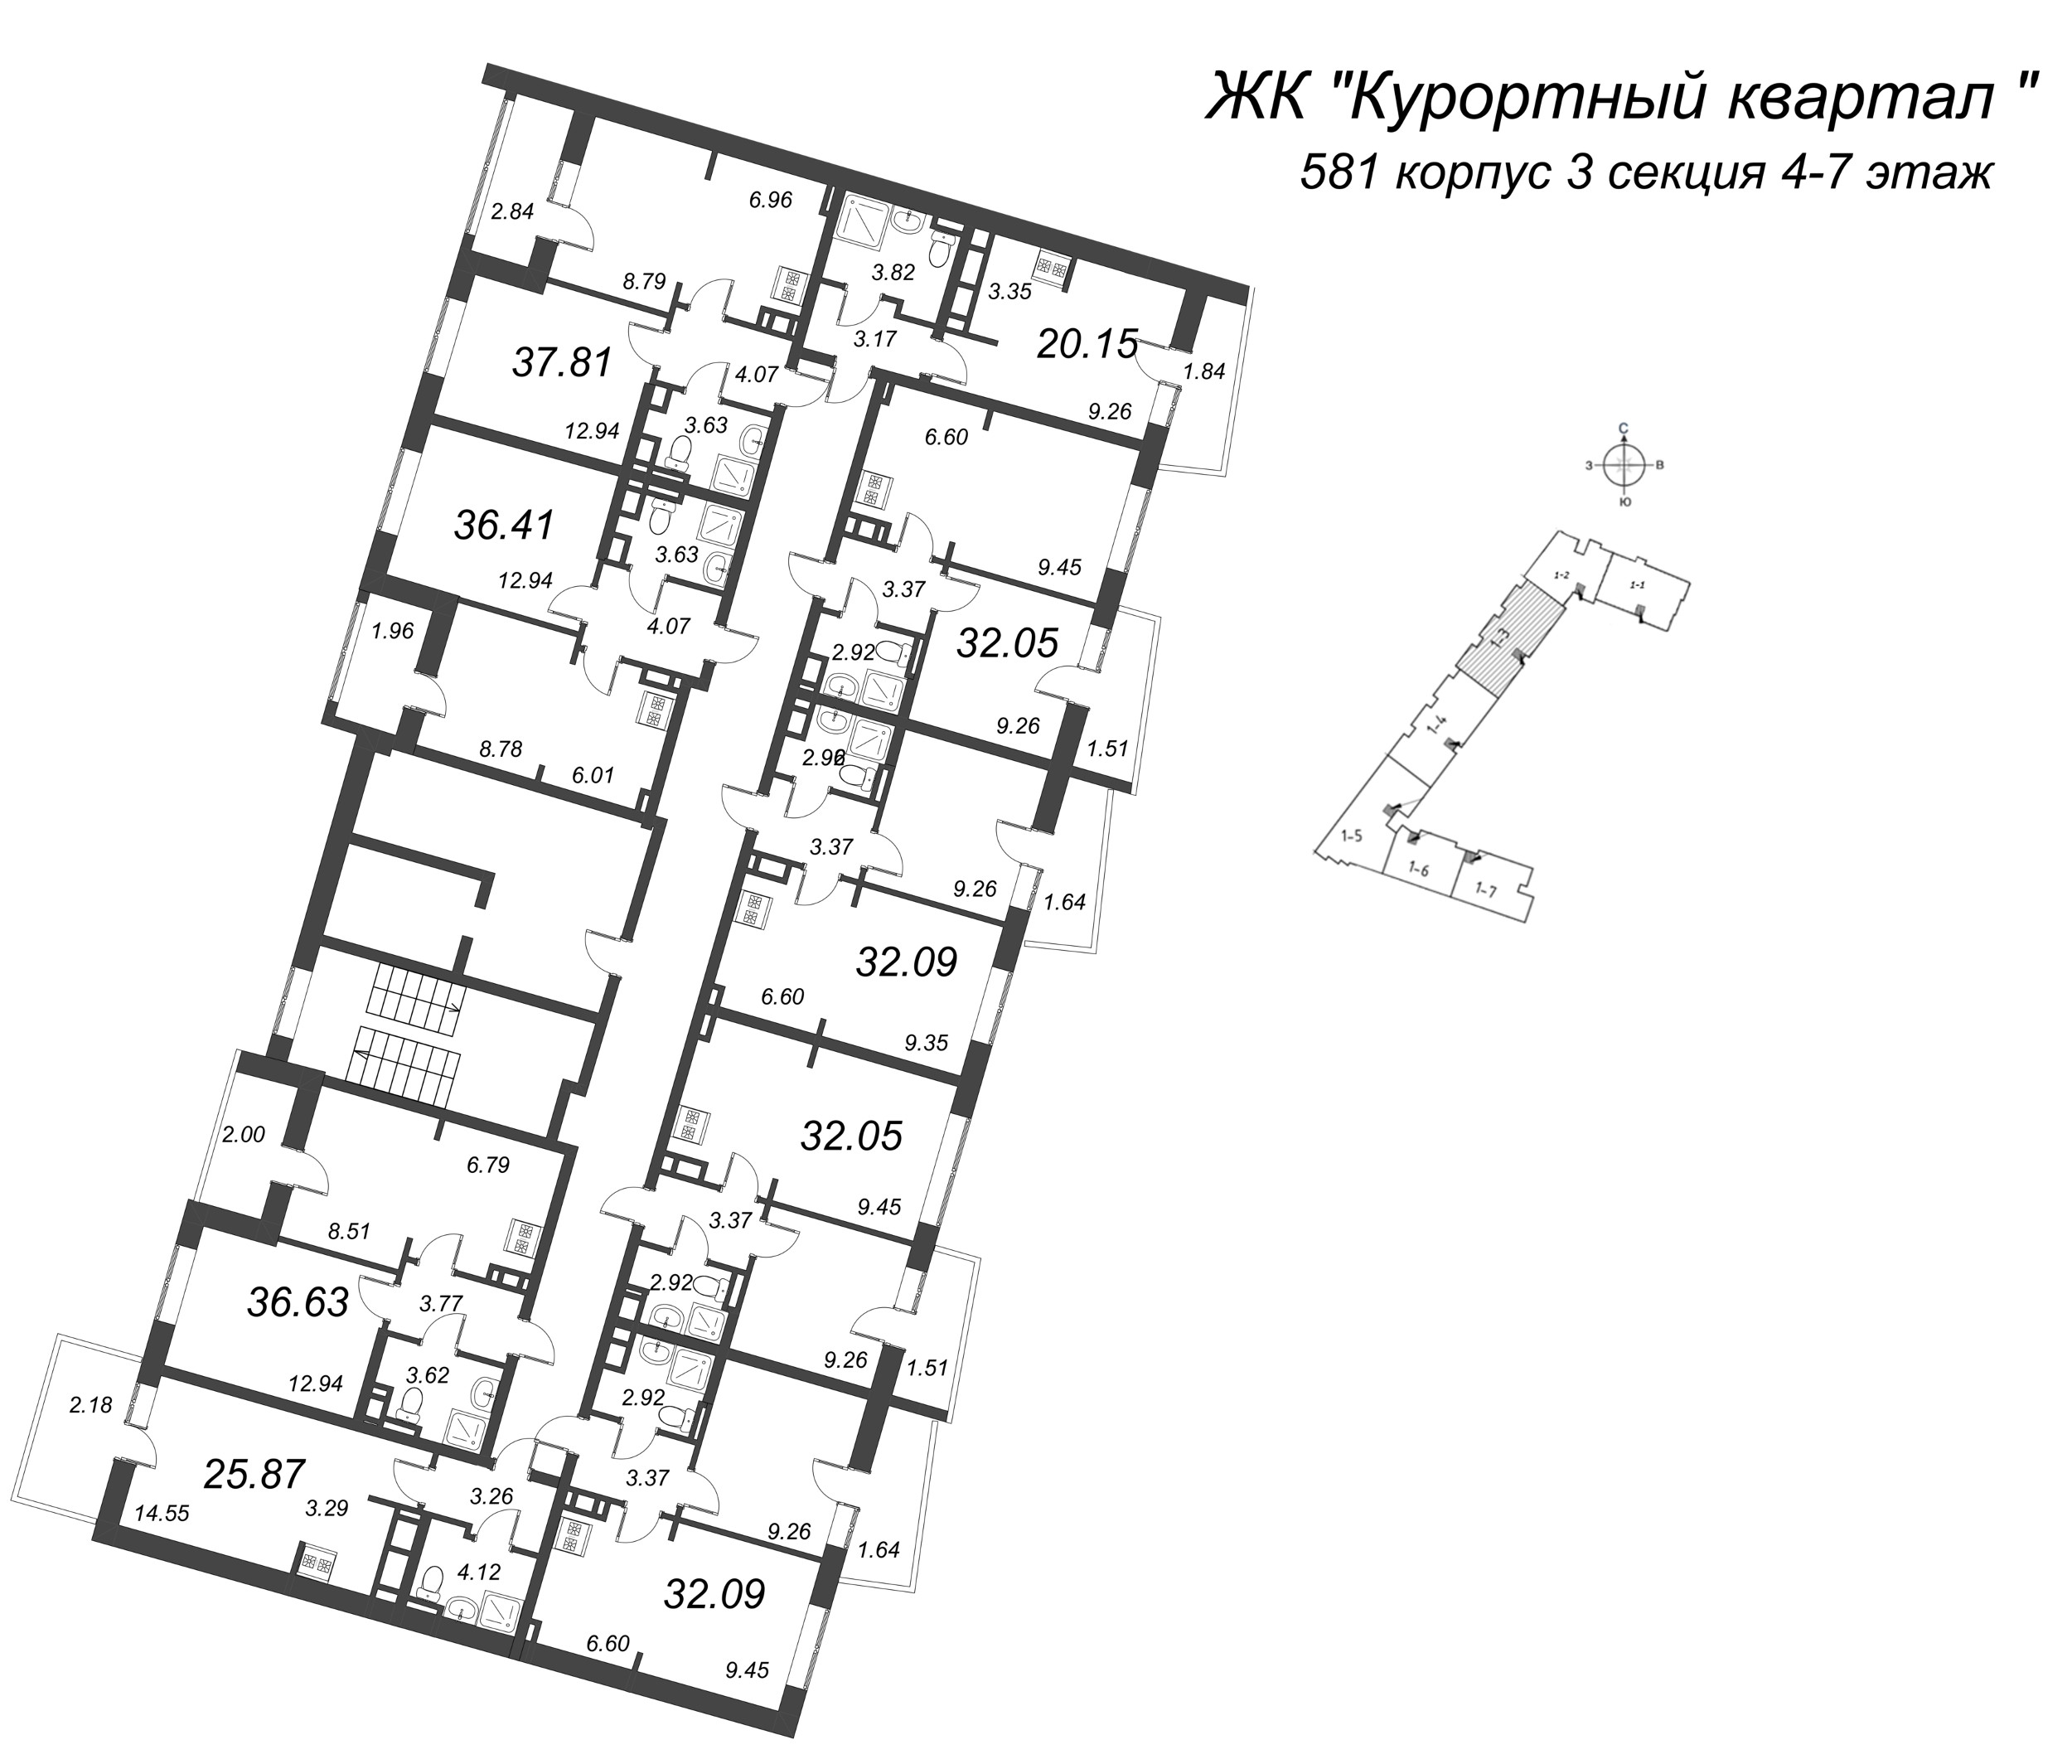 2-комнатная (Евро) квартира, 32.09 м² - планировка этажа